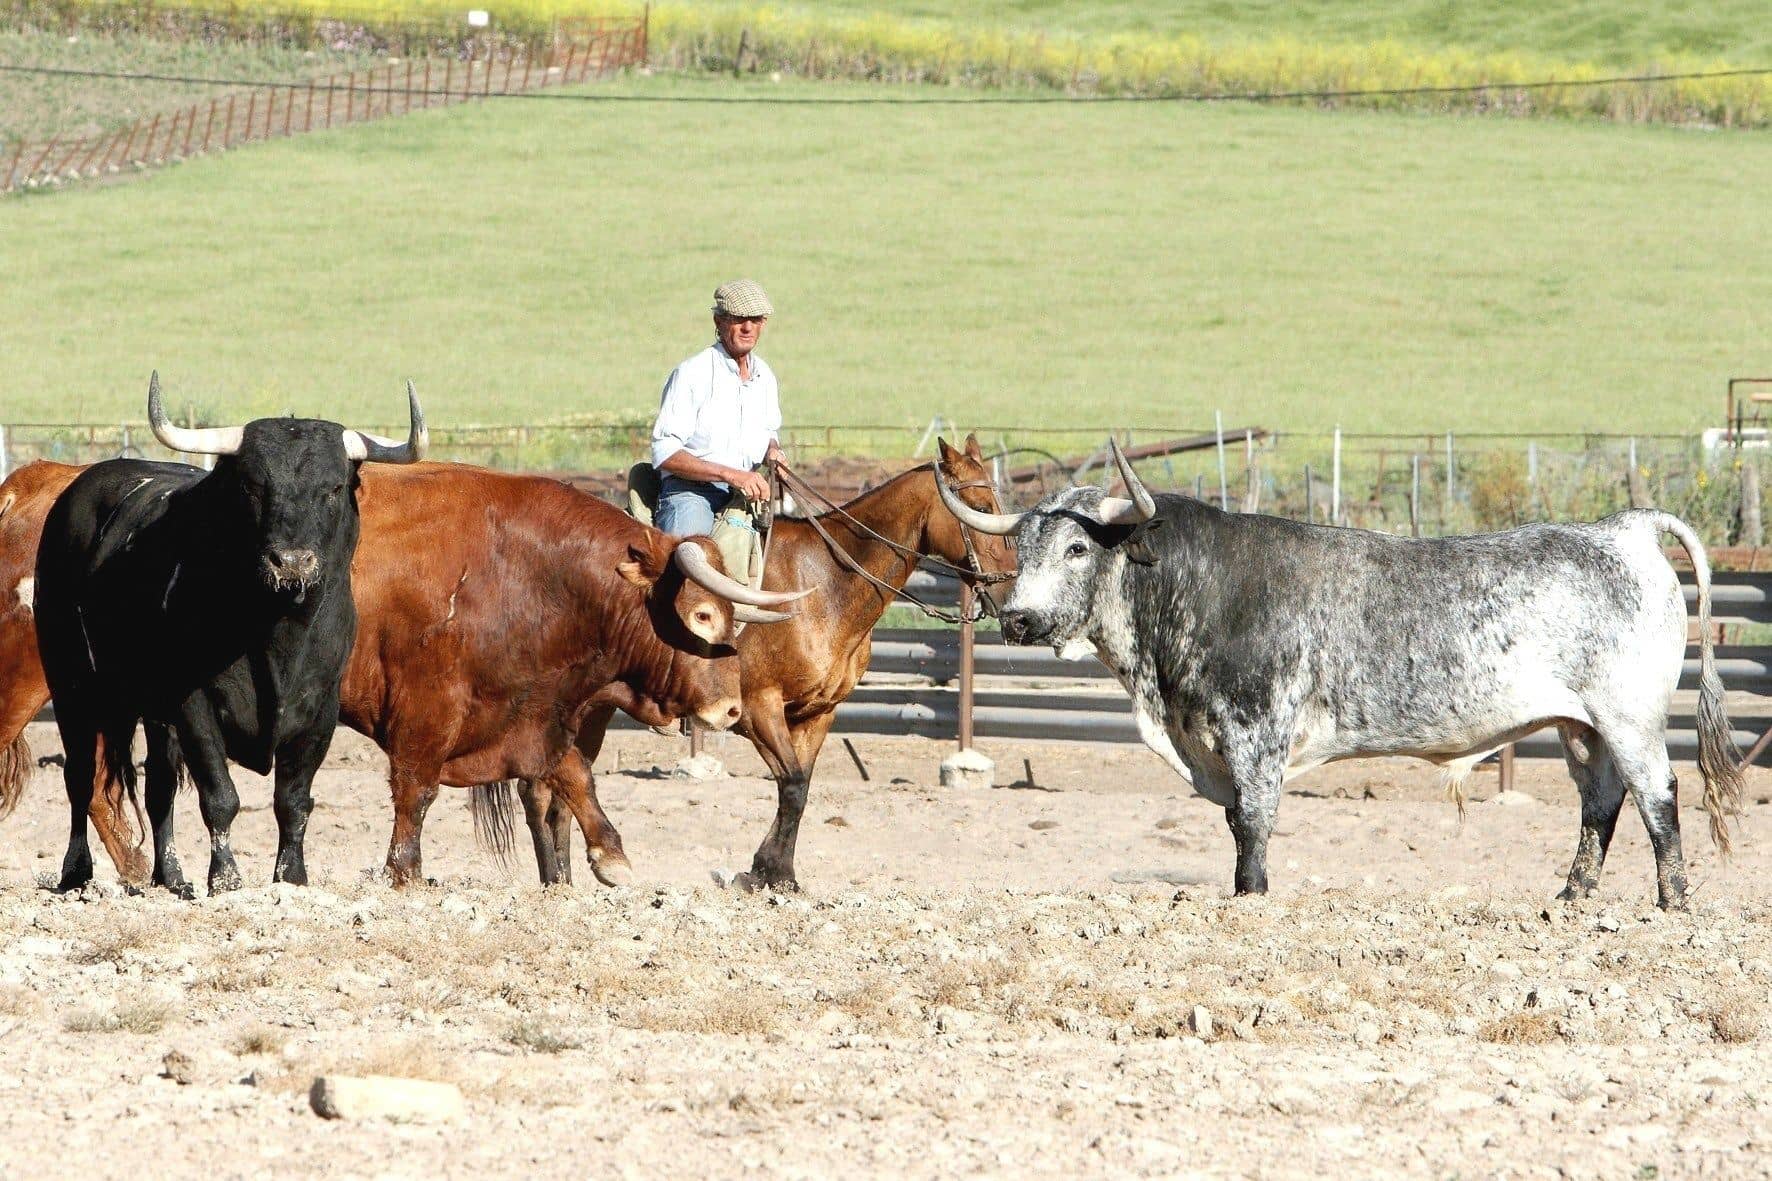 Man on horseback with huge bulls in a field